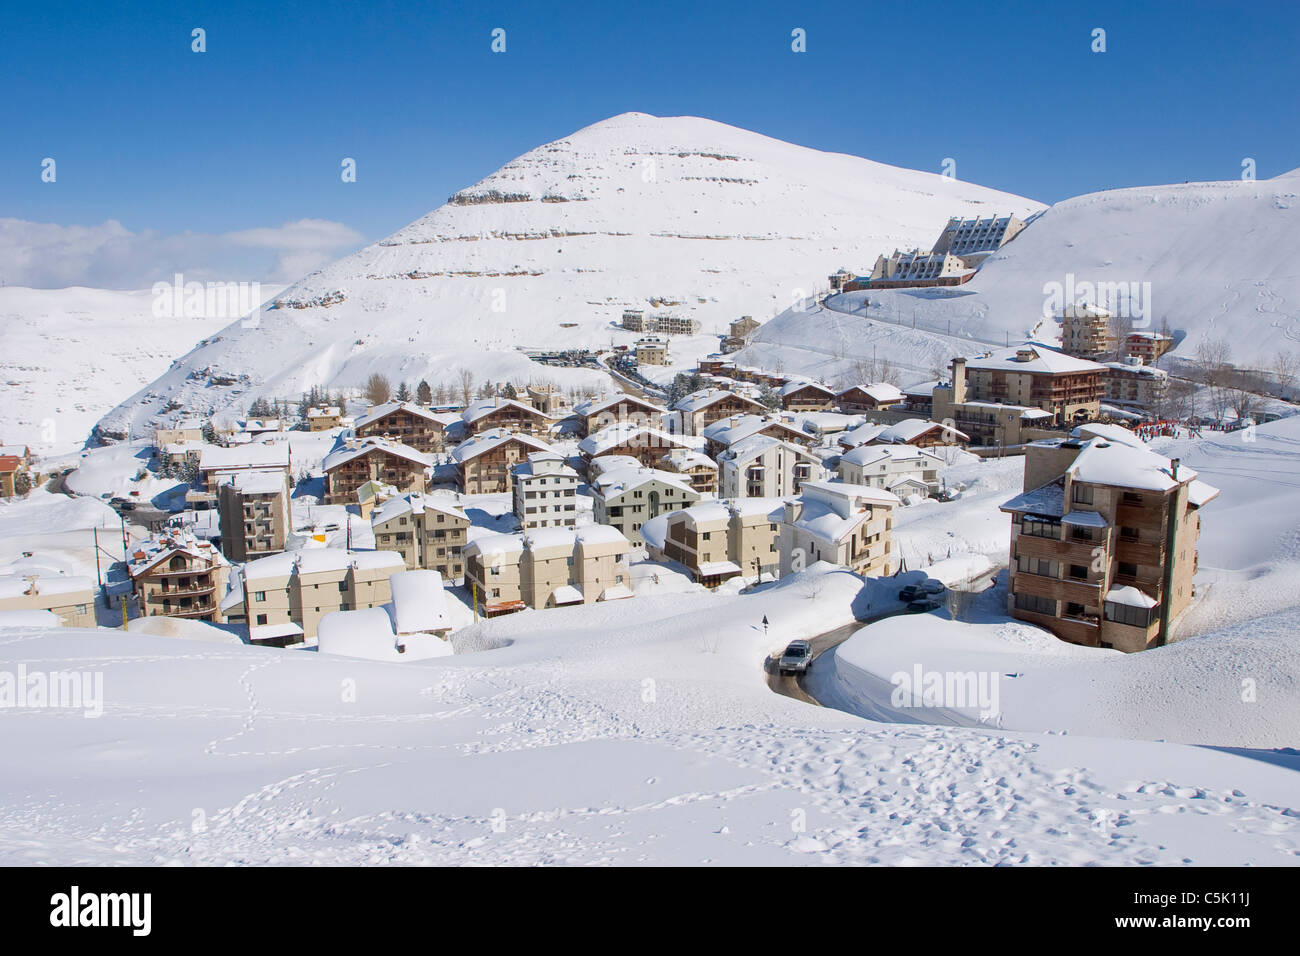 Snow covered ski resort, Mzaar, Faraya, Lebanon Stock Photo